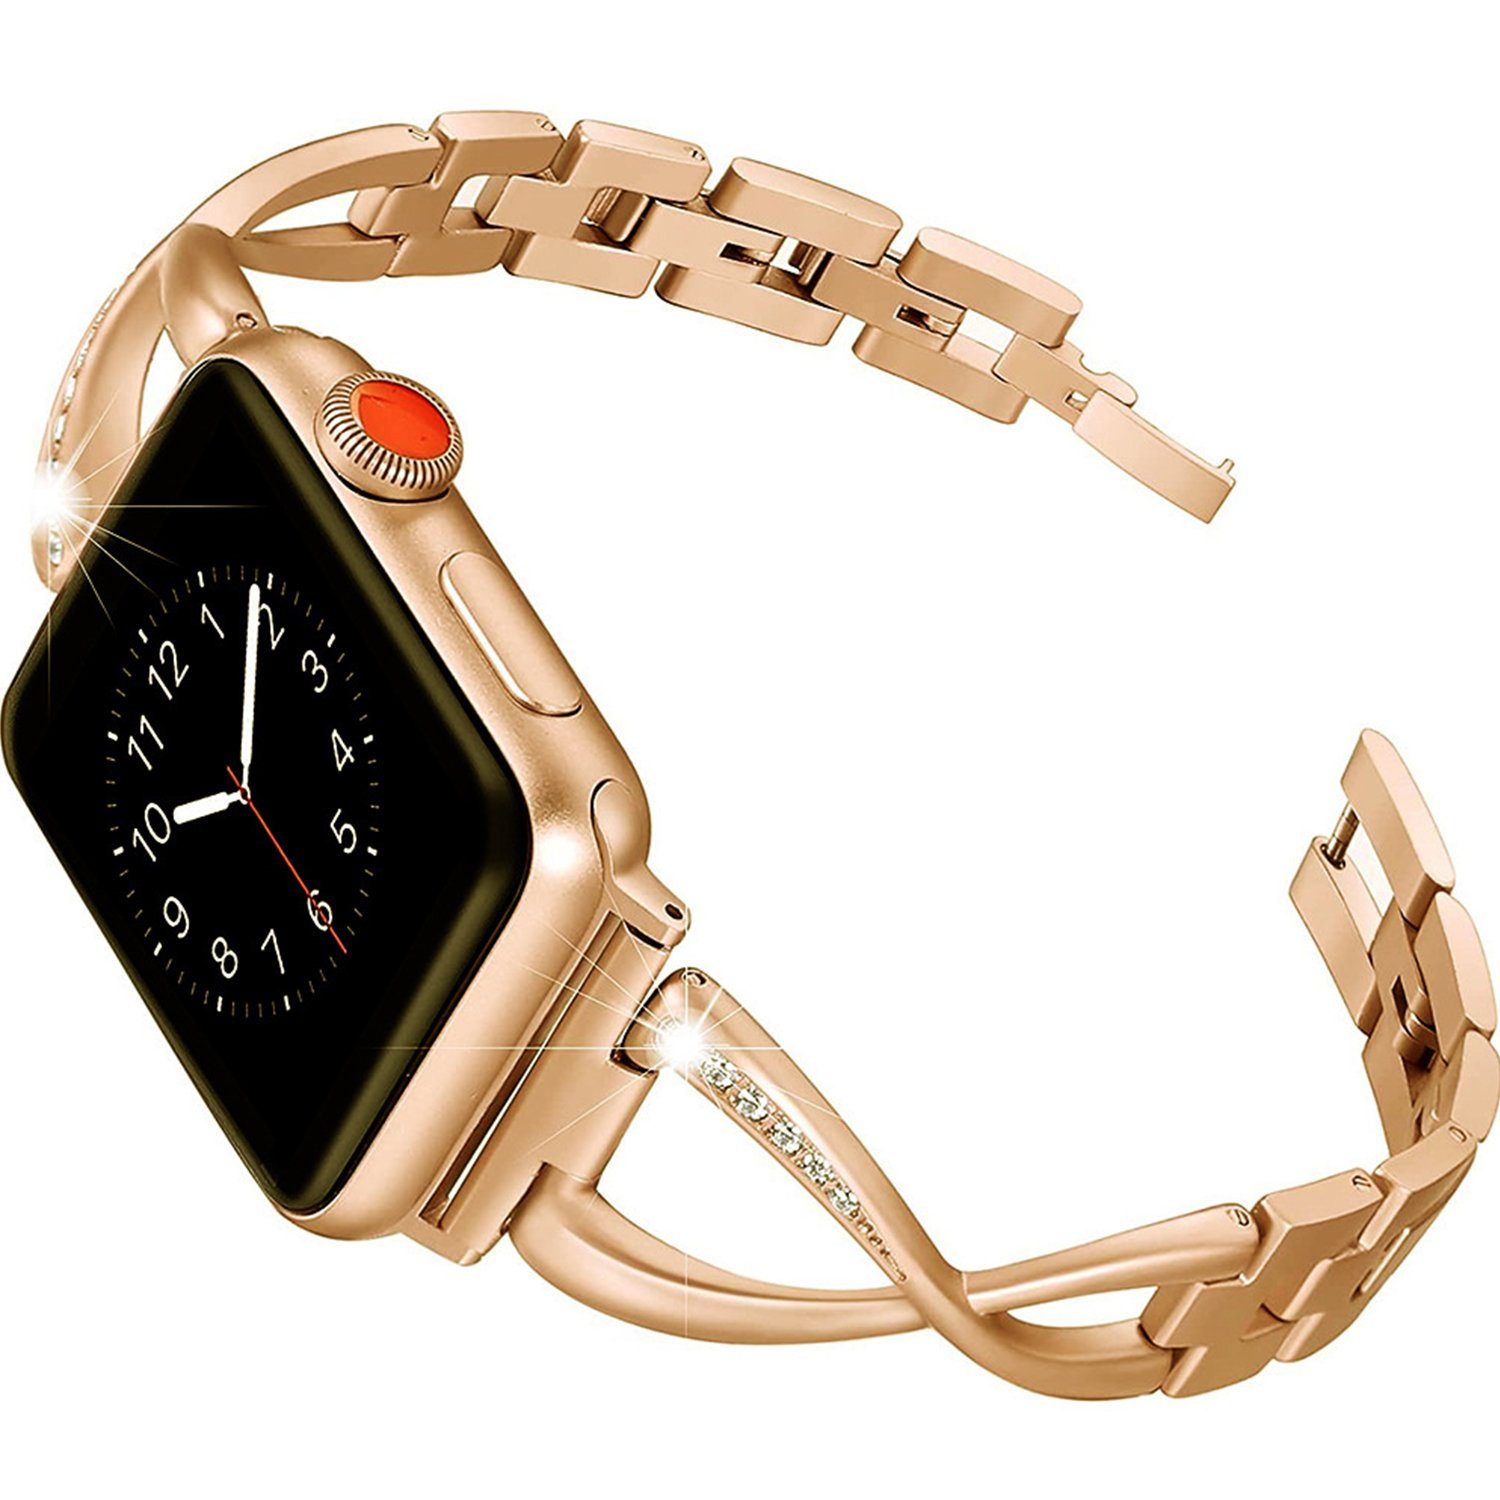 Watch apple Smartwatch-Armband 1-7,42/44mm Gold watch Diida Rose Band,Uhrenarmbänder,für